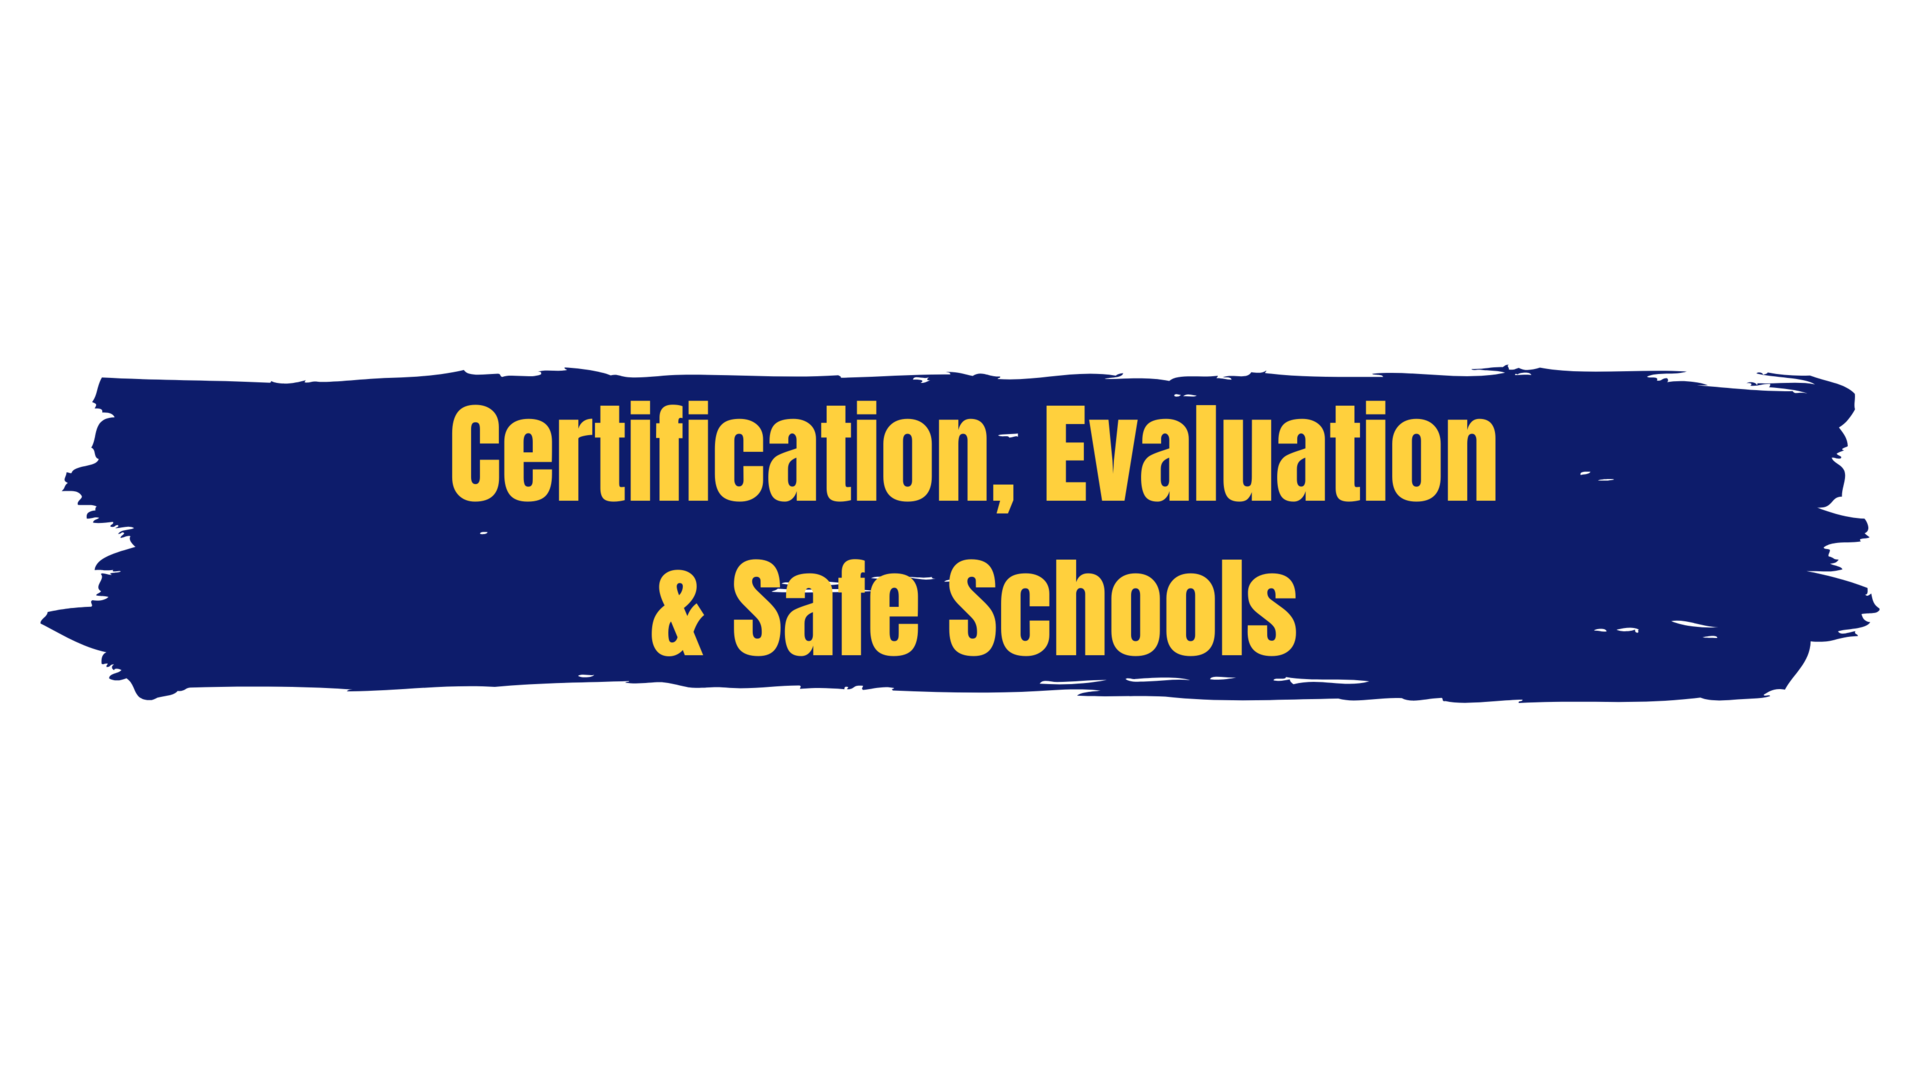 Certification, Evaluation & Safe Schools